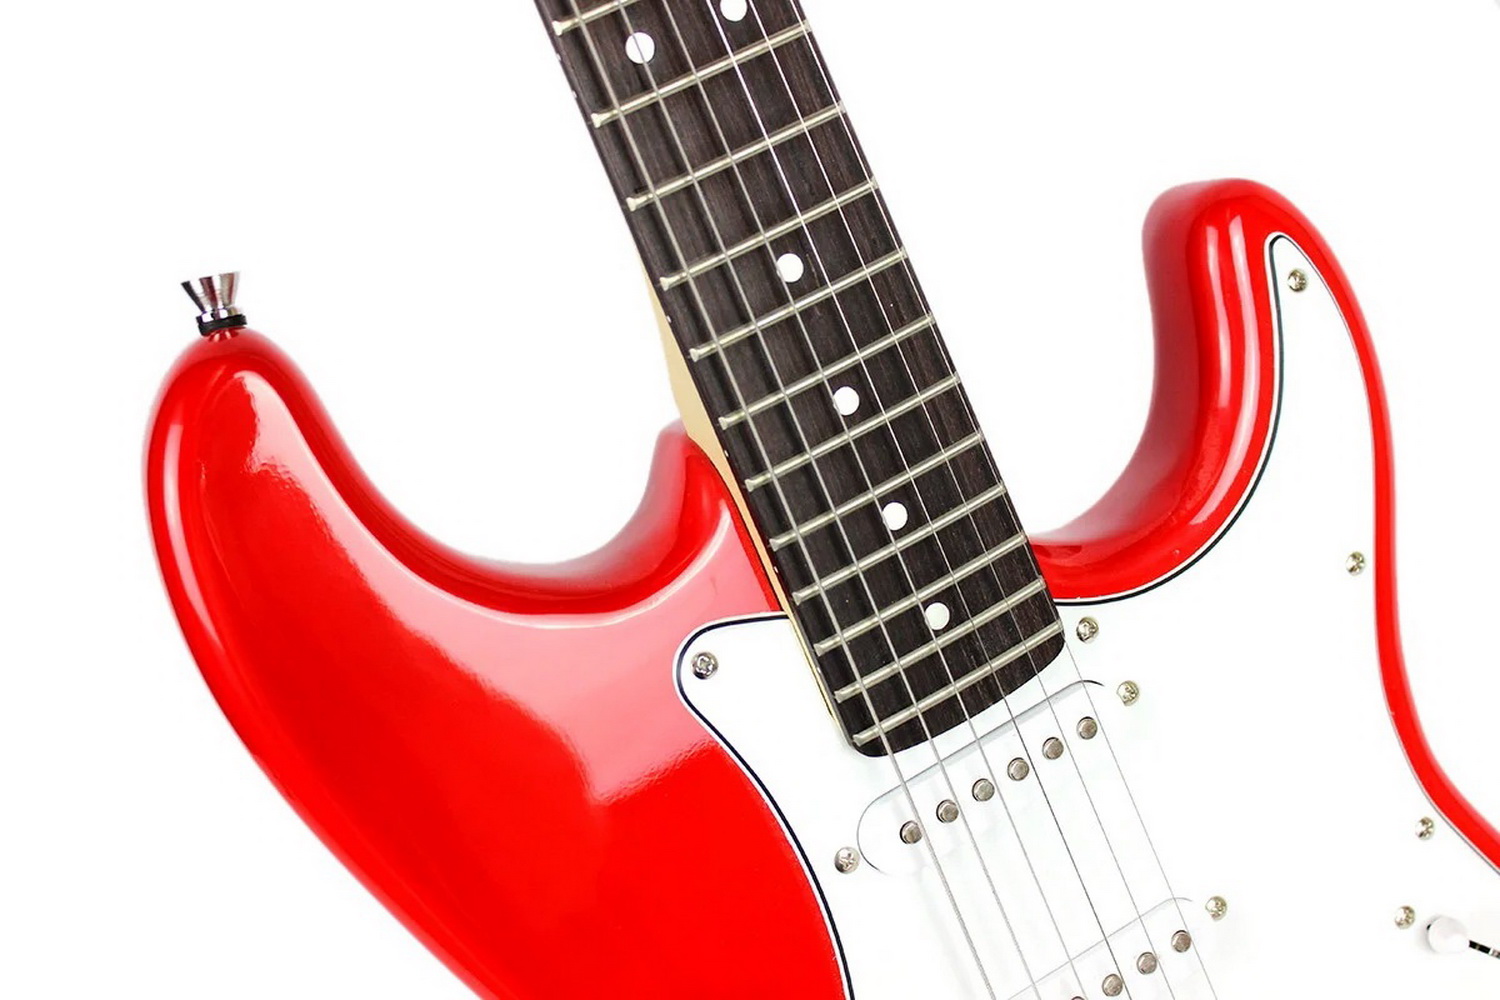 Squier mm stratocaster. Fender Squier mm hard Tail Red. Бюджетные электрогитары для начинающих. Красная электрогитара с тремоло. Электрогитары красно чёрный в полоску.